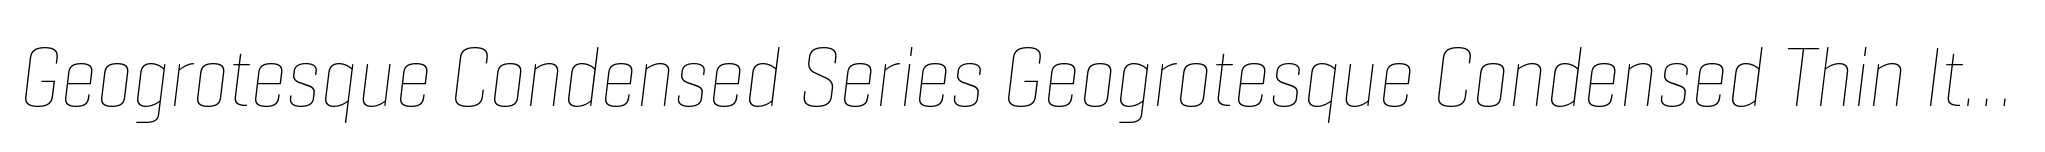 Geogrotesque Condensed Series Geogrotesque Condensed Thin Italic image